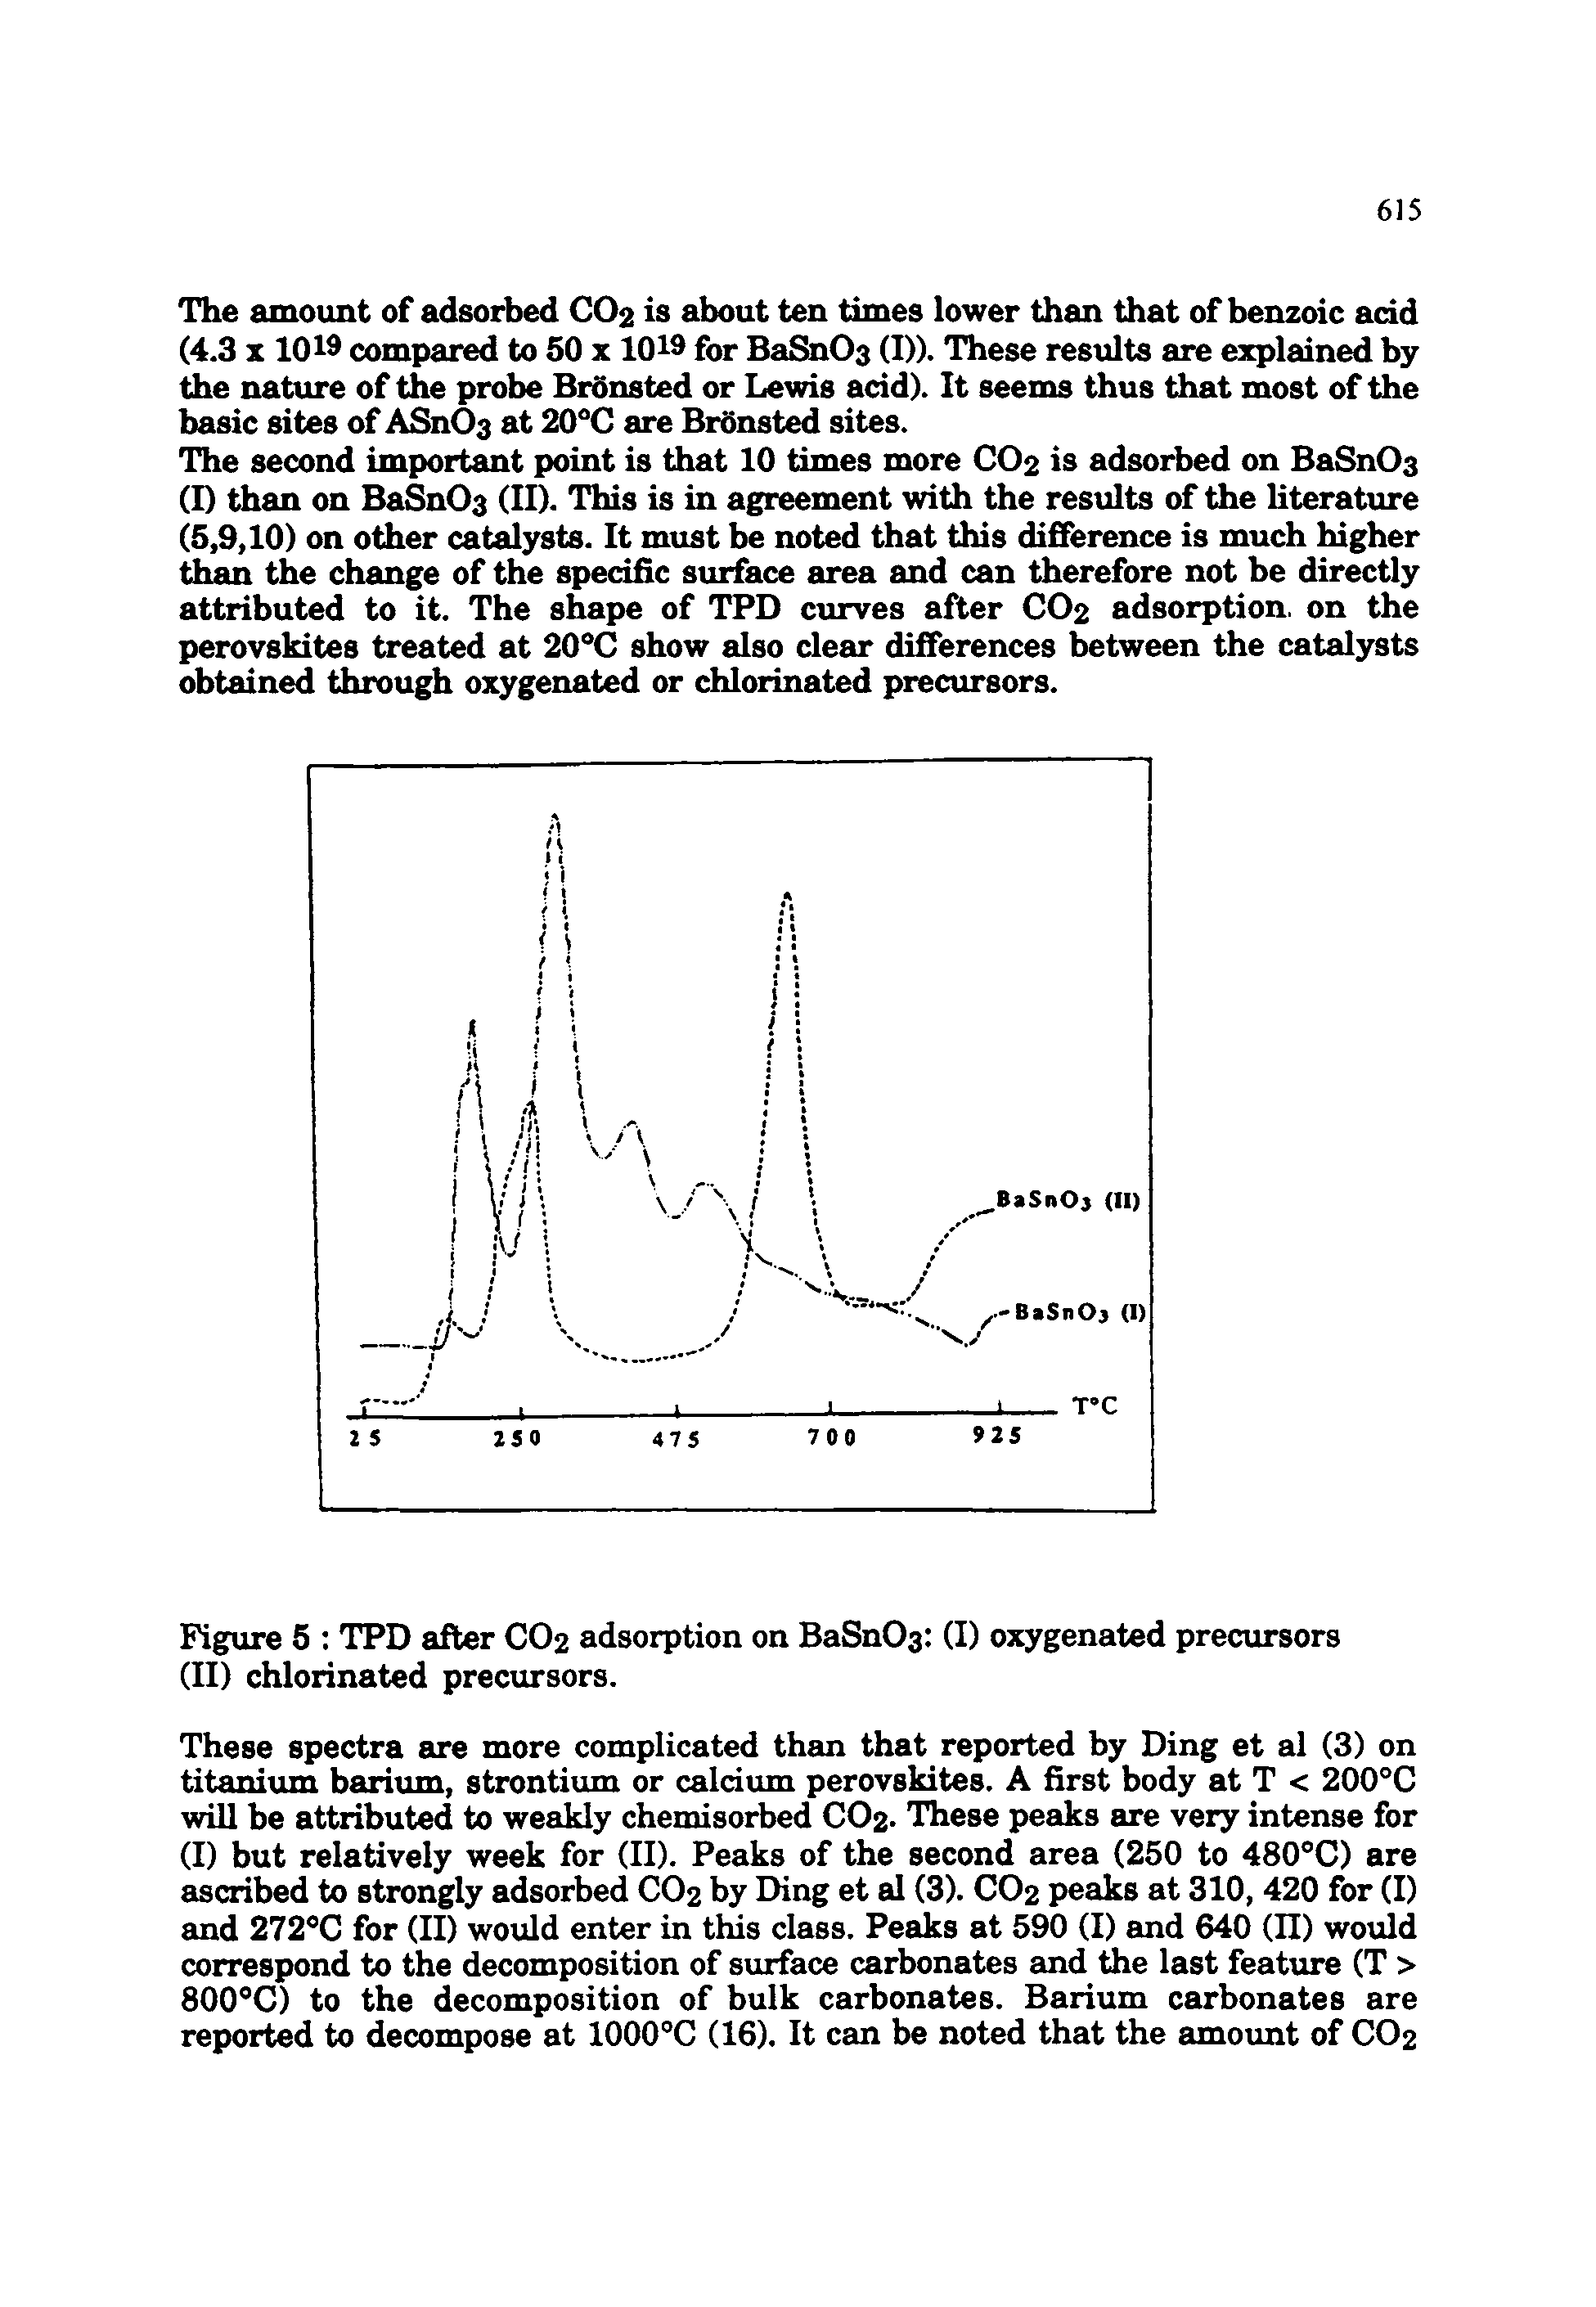 Figure 5 TPD after CO2 adsorption on BaSnOs (I) oxygenated precursors (II) chlorinated precursors.